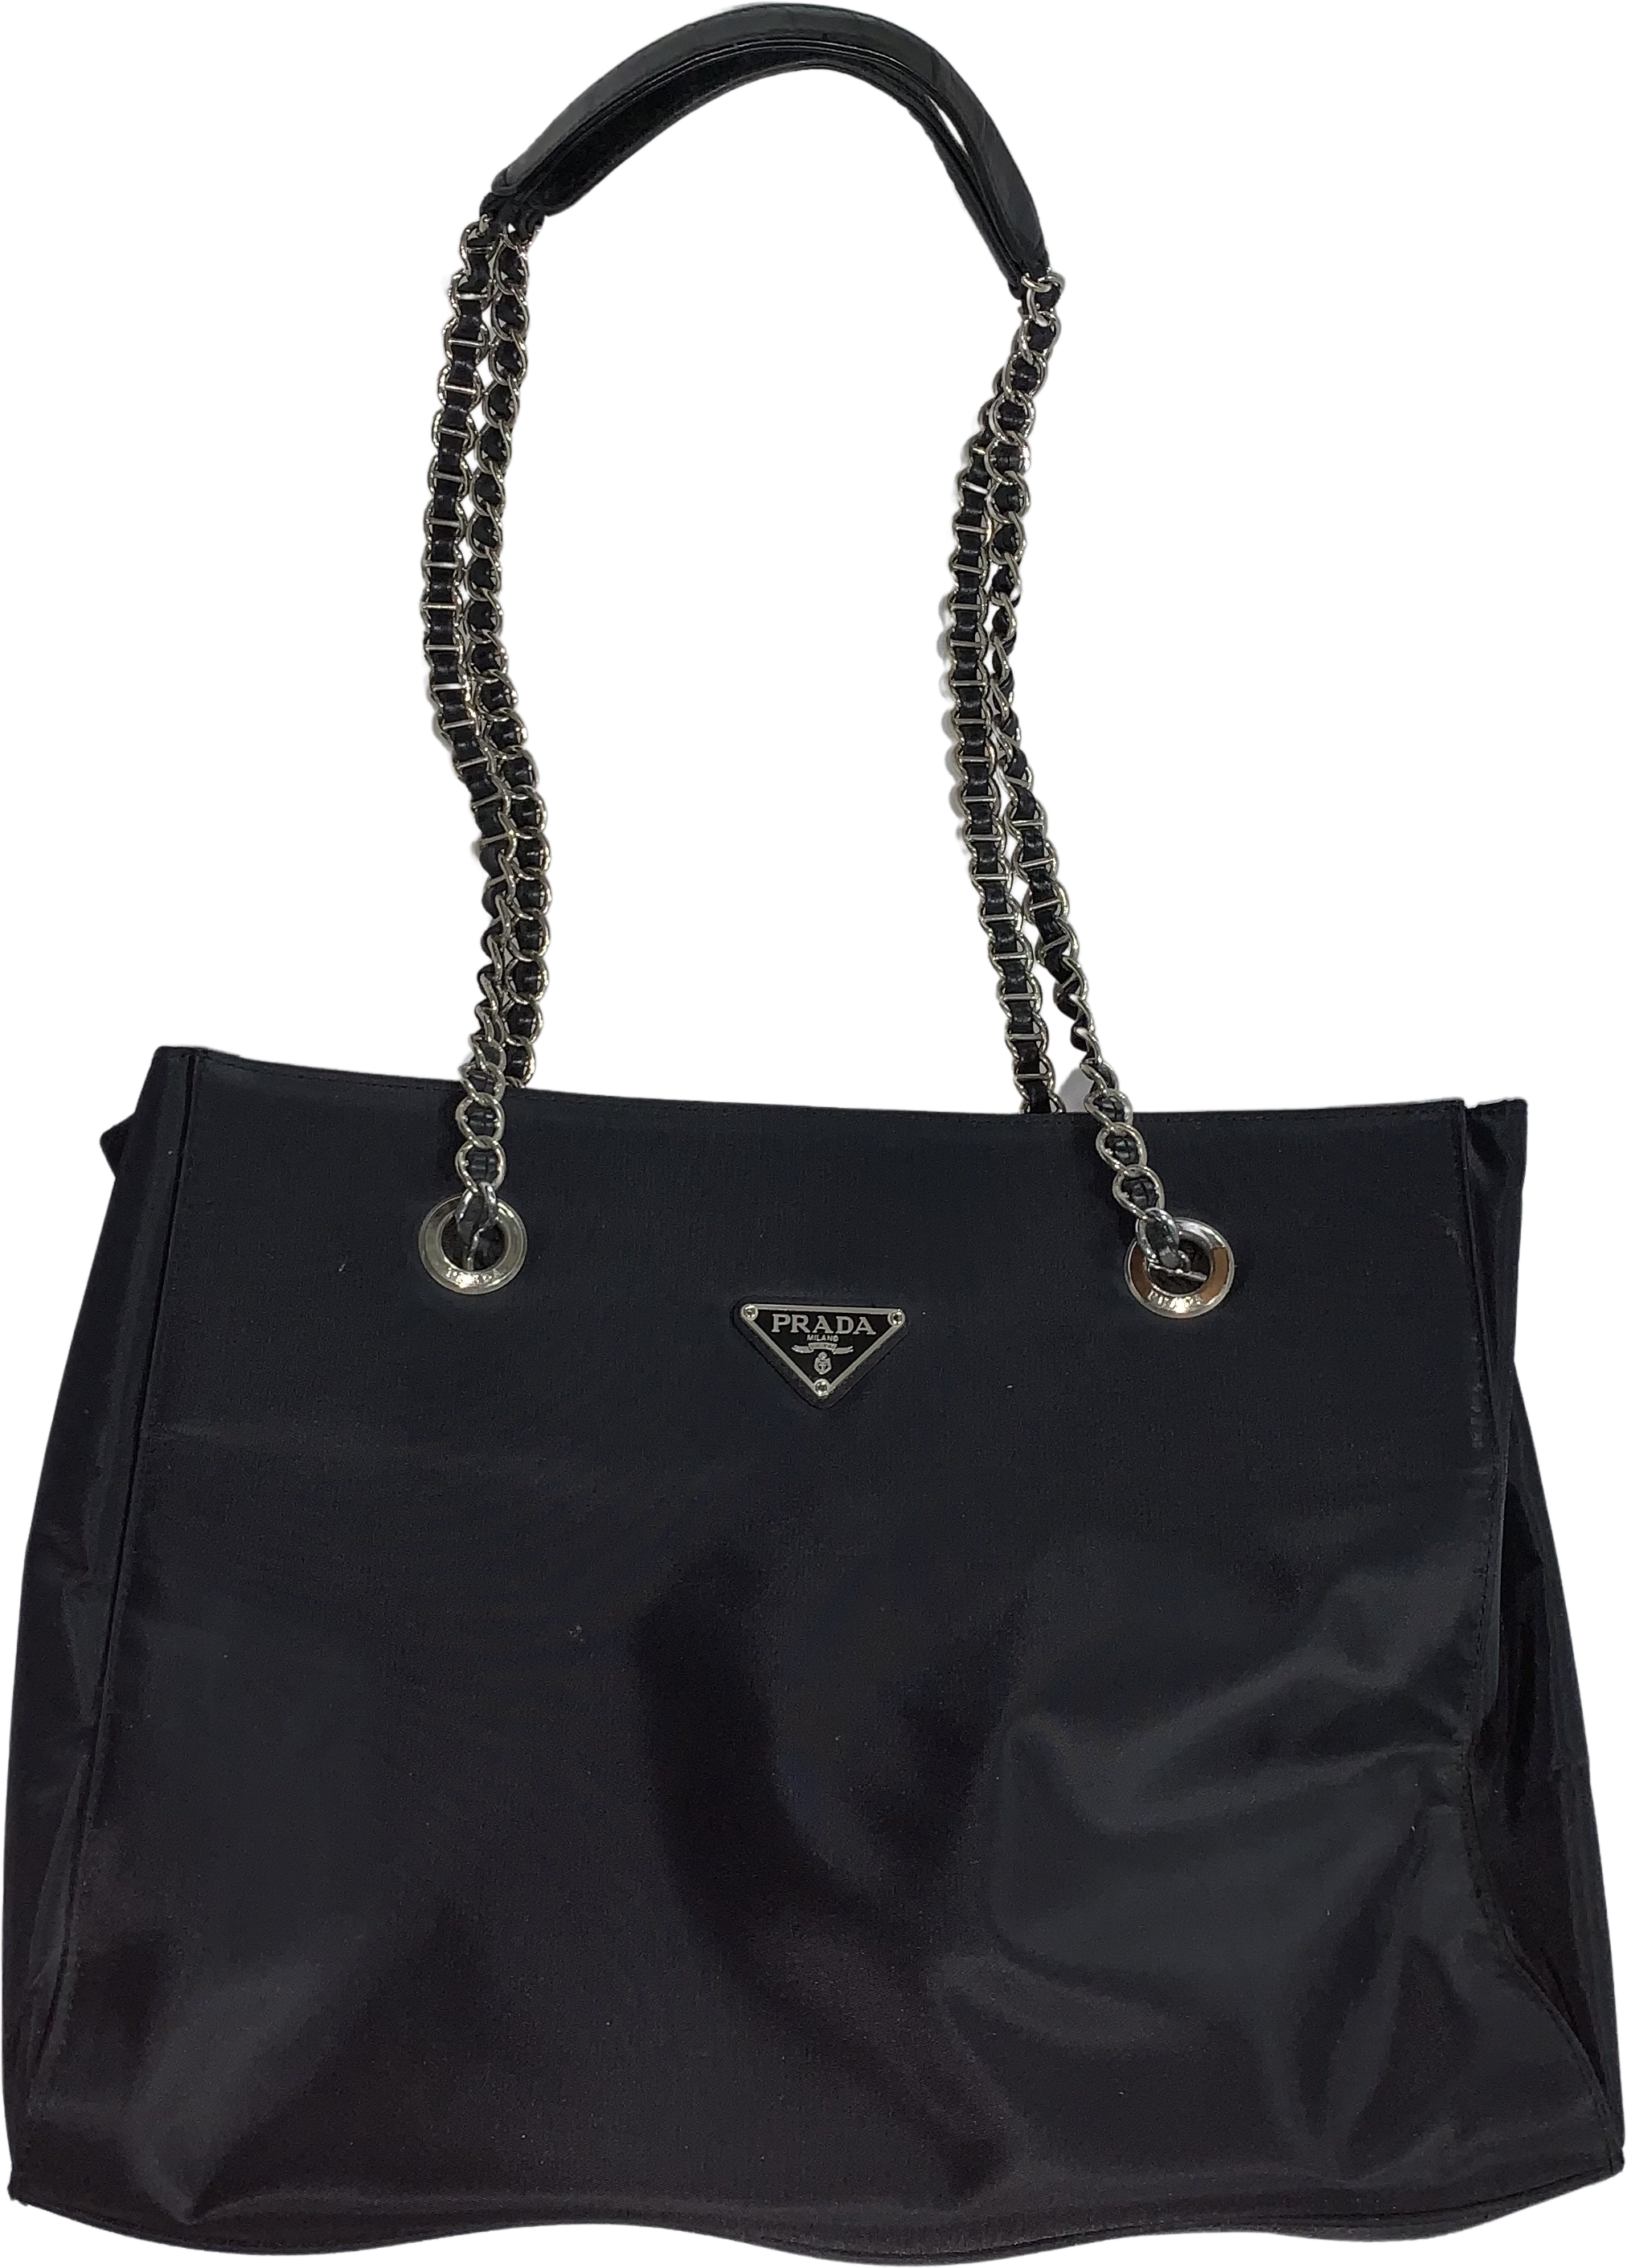 Prada PRADA Shoulder Bag Black Gold Nylon Leather